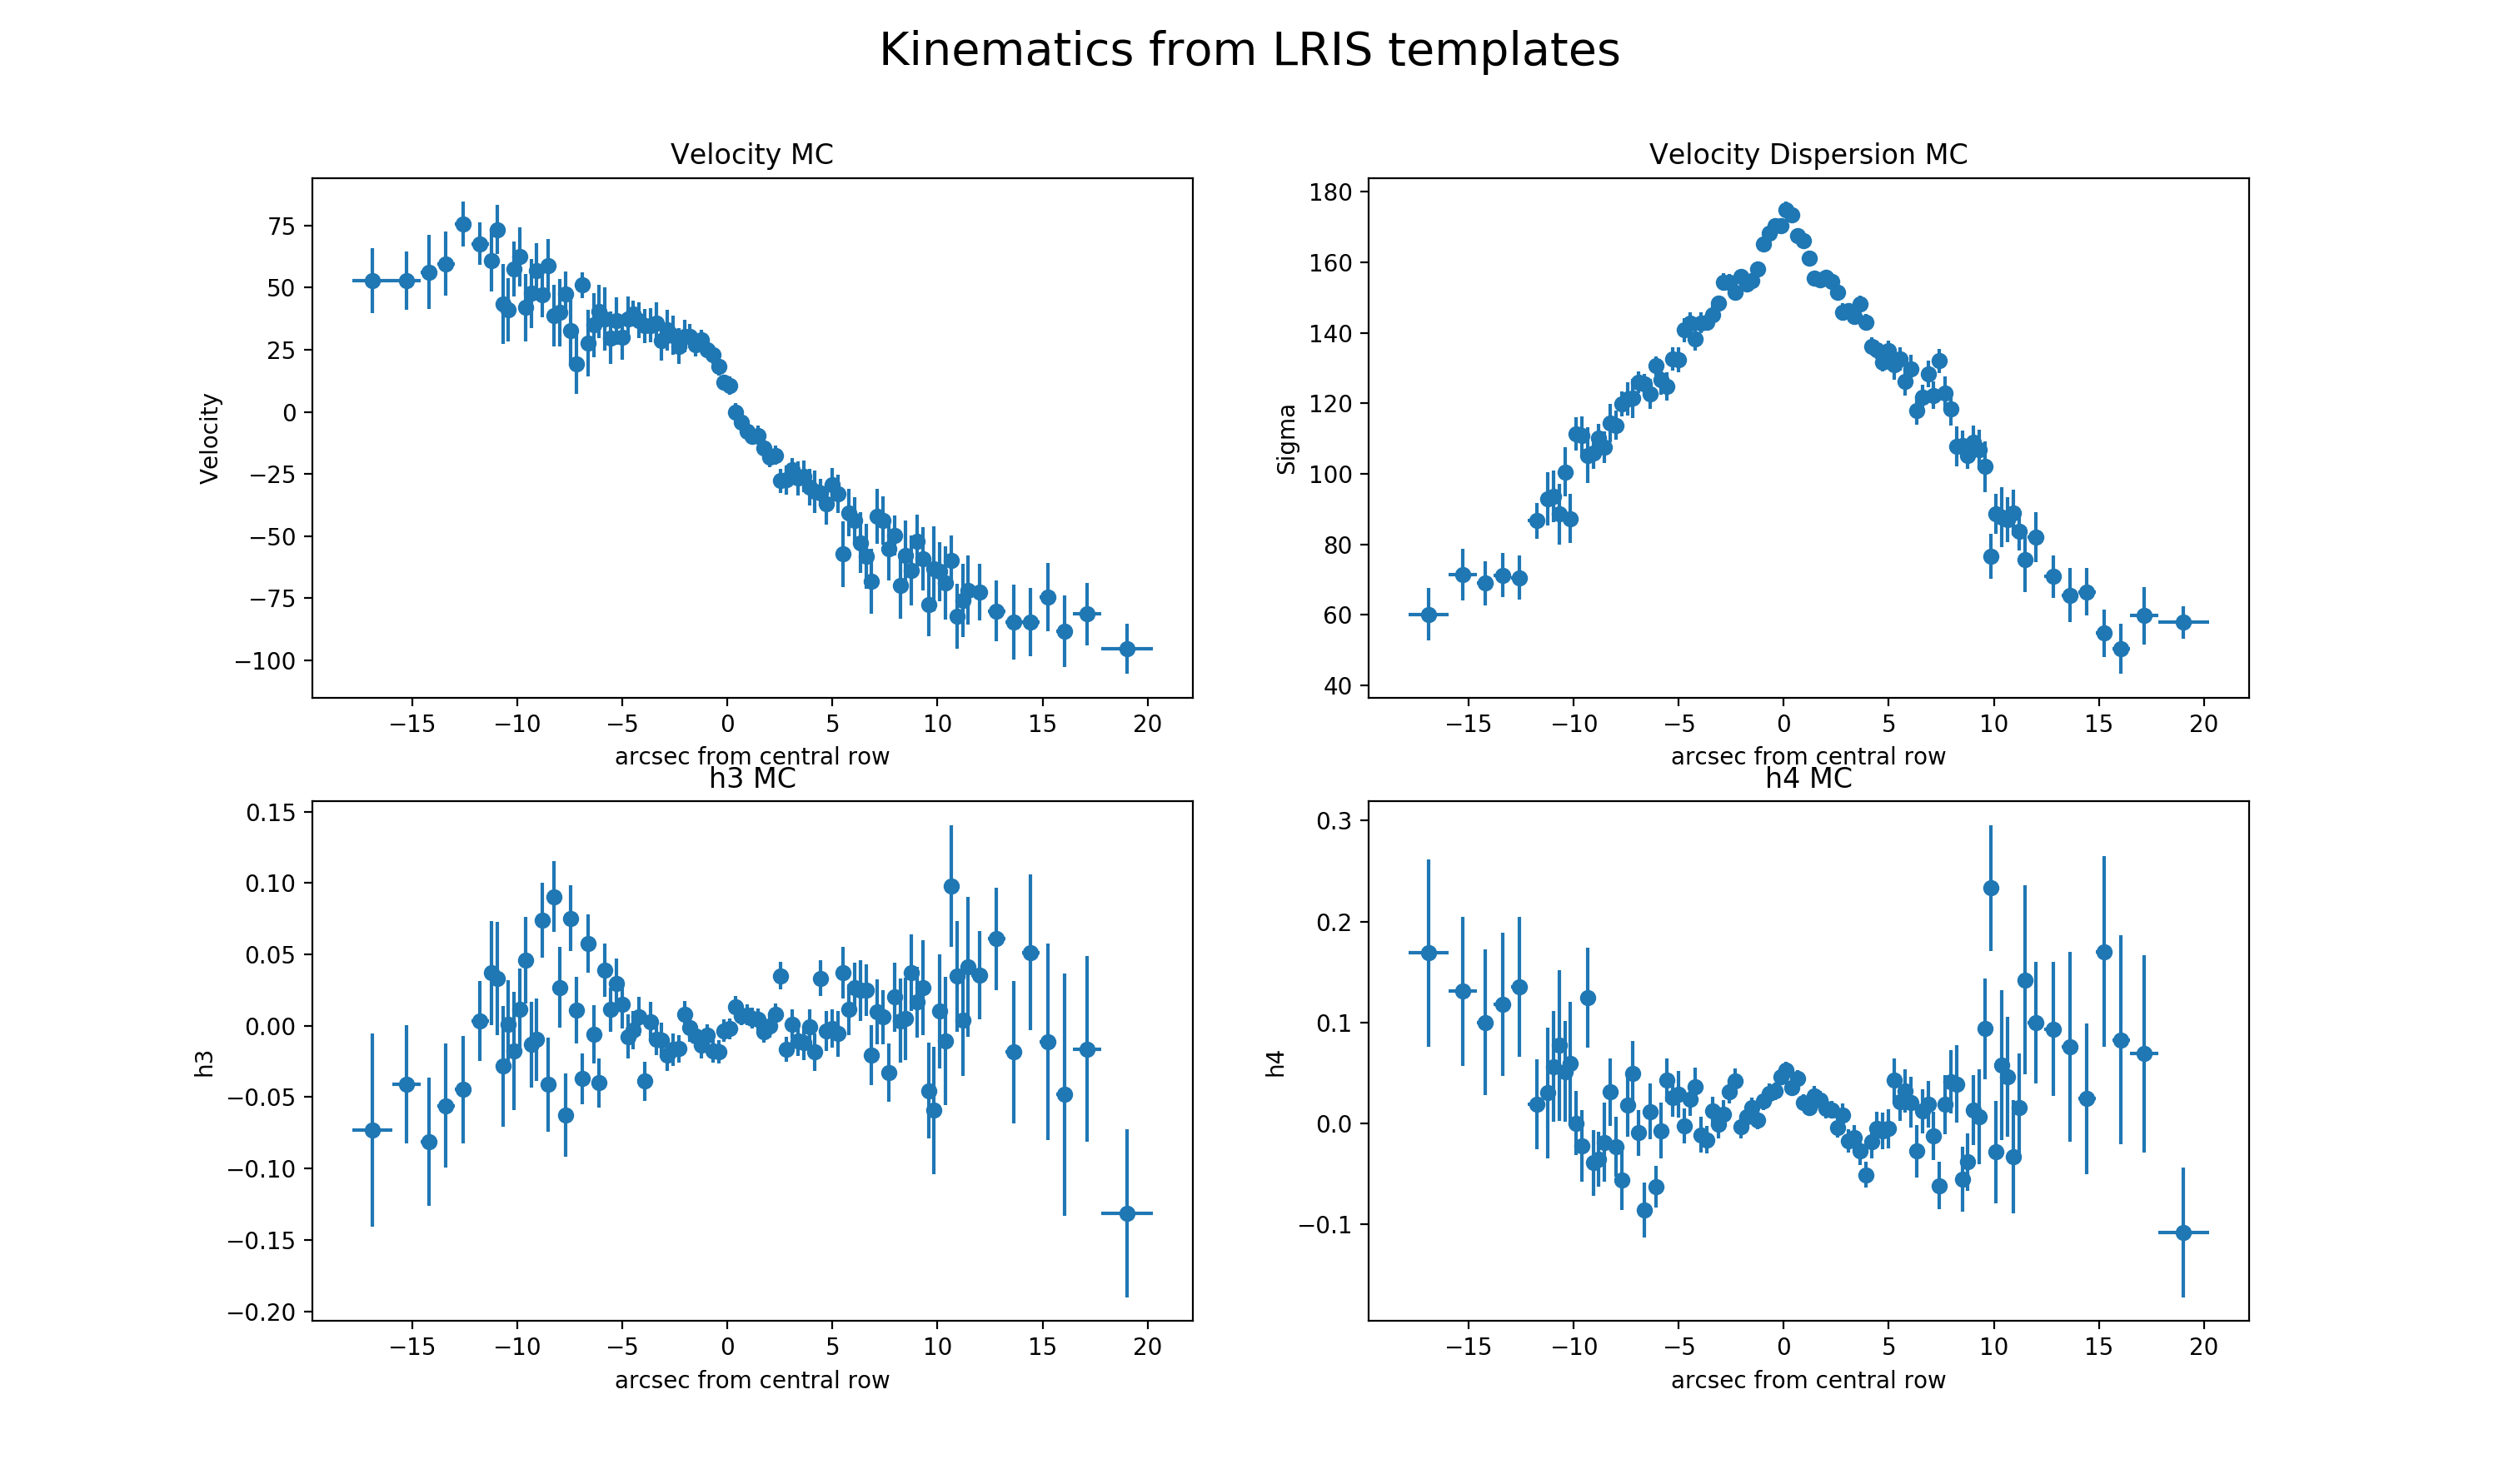 LRIS kinematics: binned Monte Carlo